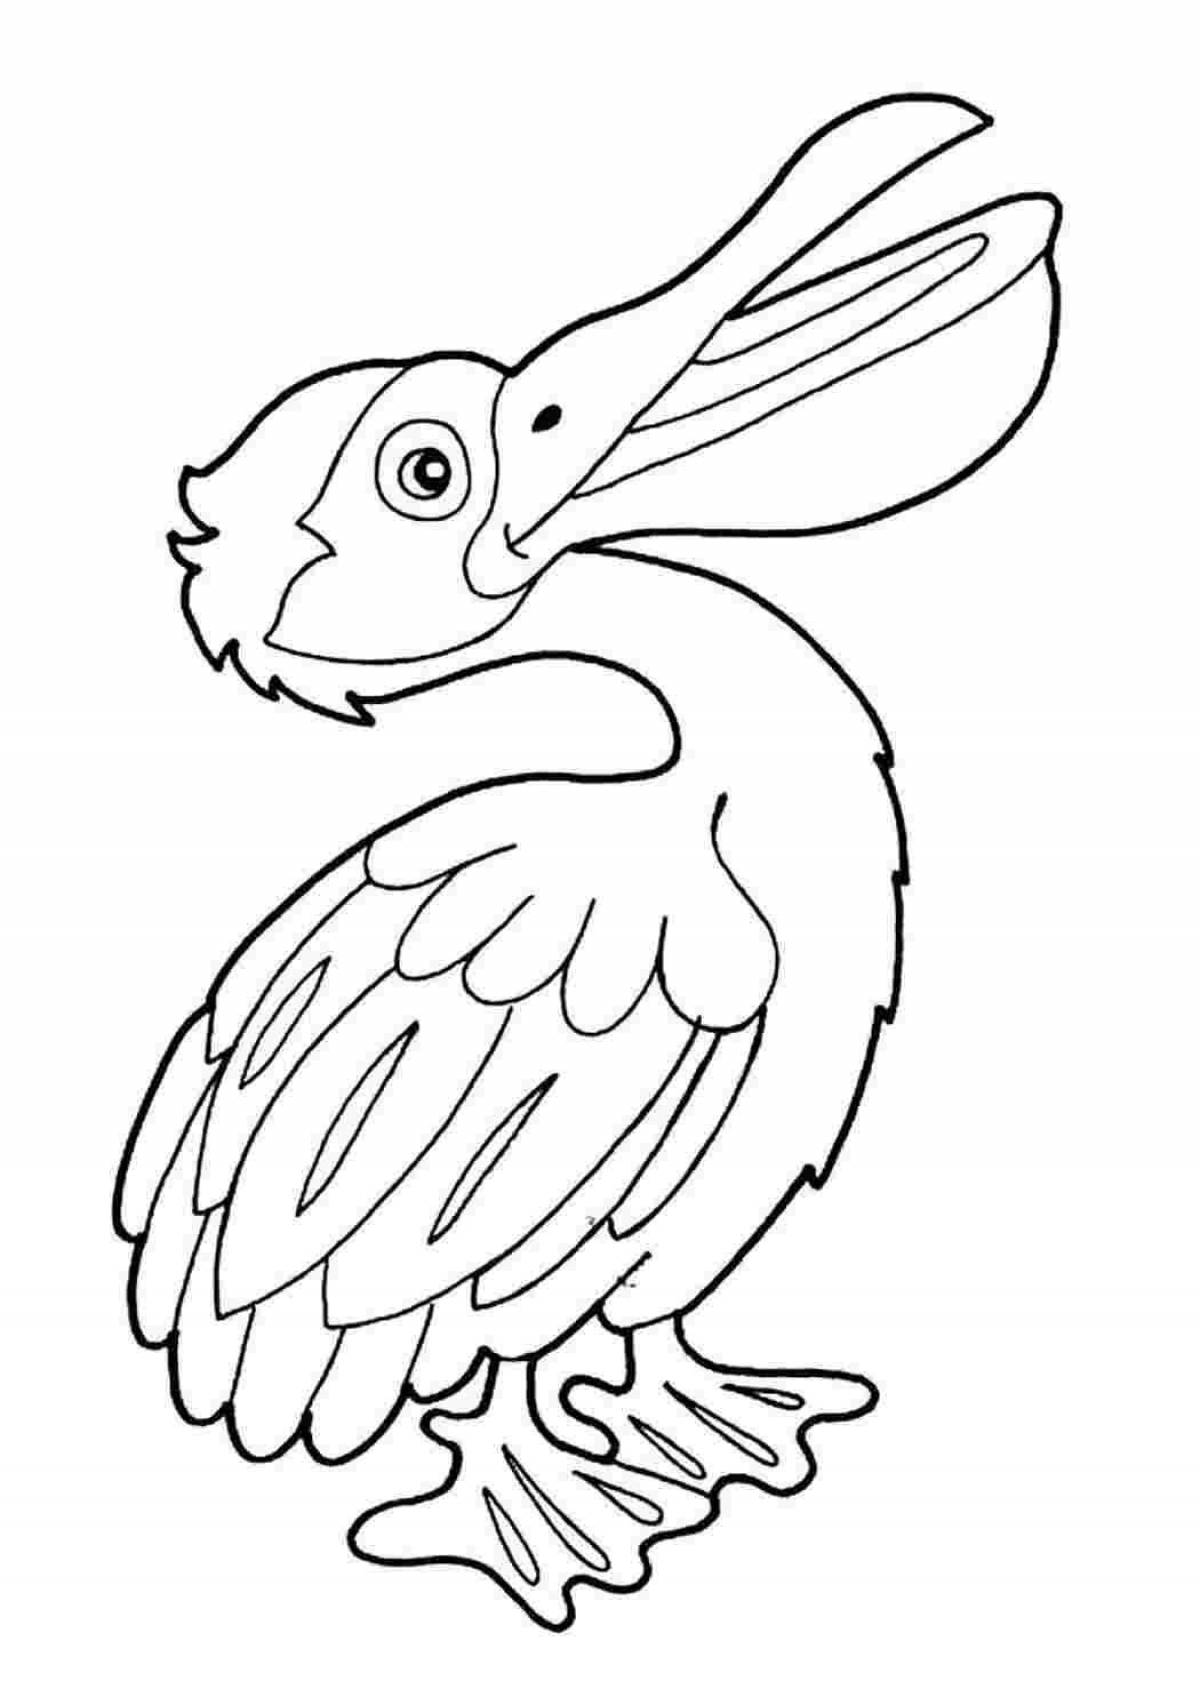 Impressive pelican coloring book for schoolchildren